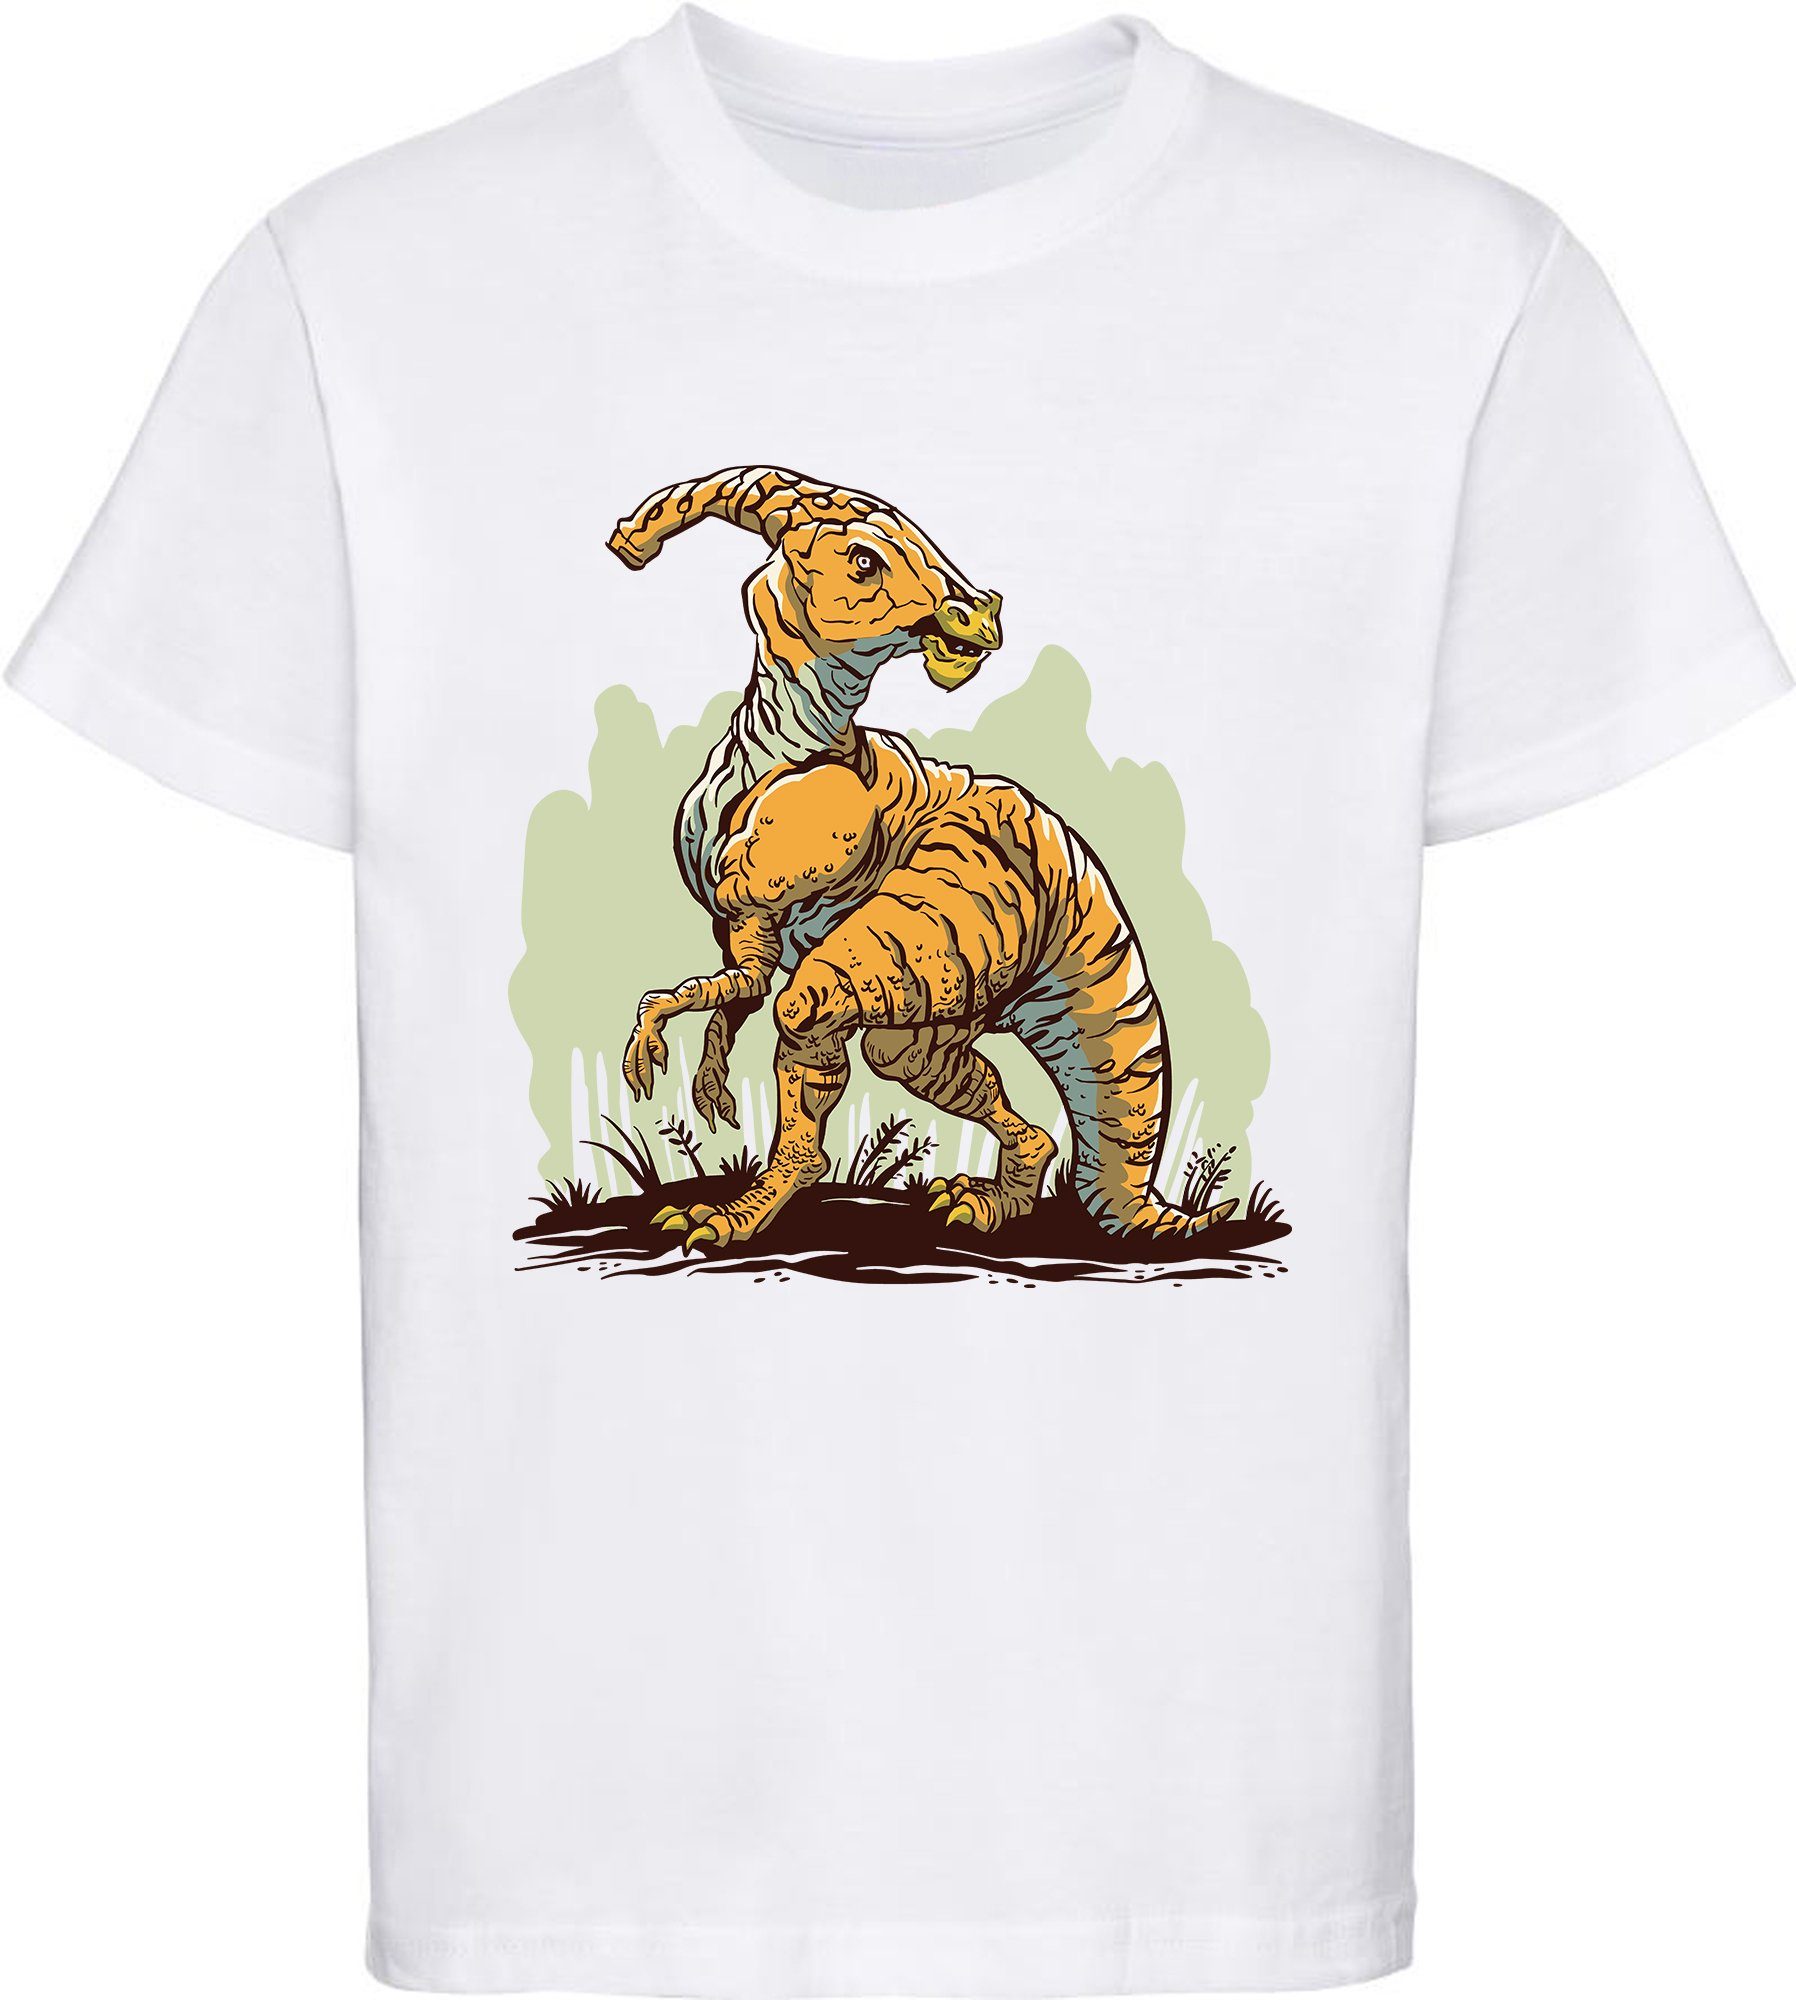 MyDesign24 Print-Shirt bedrucktes Kinder T-Shirt Parasaurolophus Baumwollshirt mit Dino, schwarz, weiß, rot, blau, i99 weiss